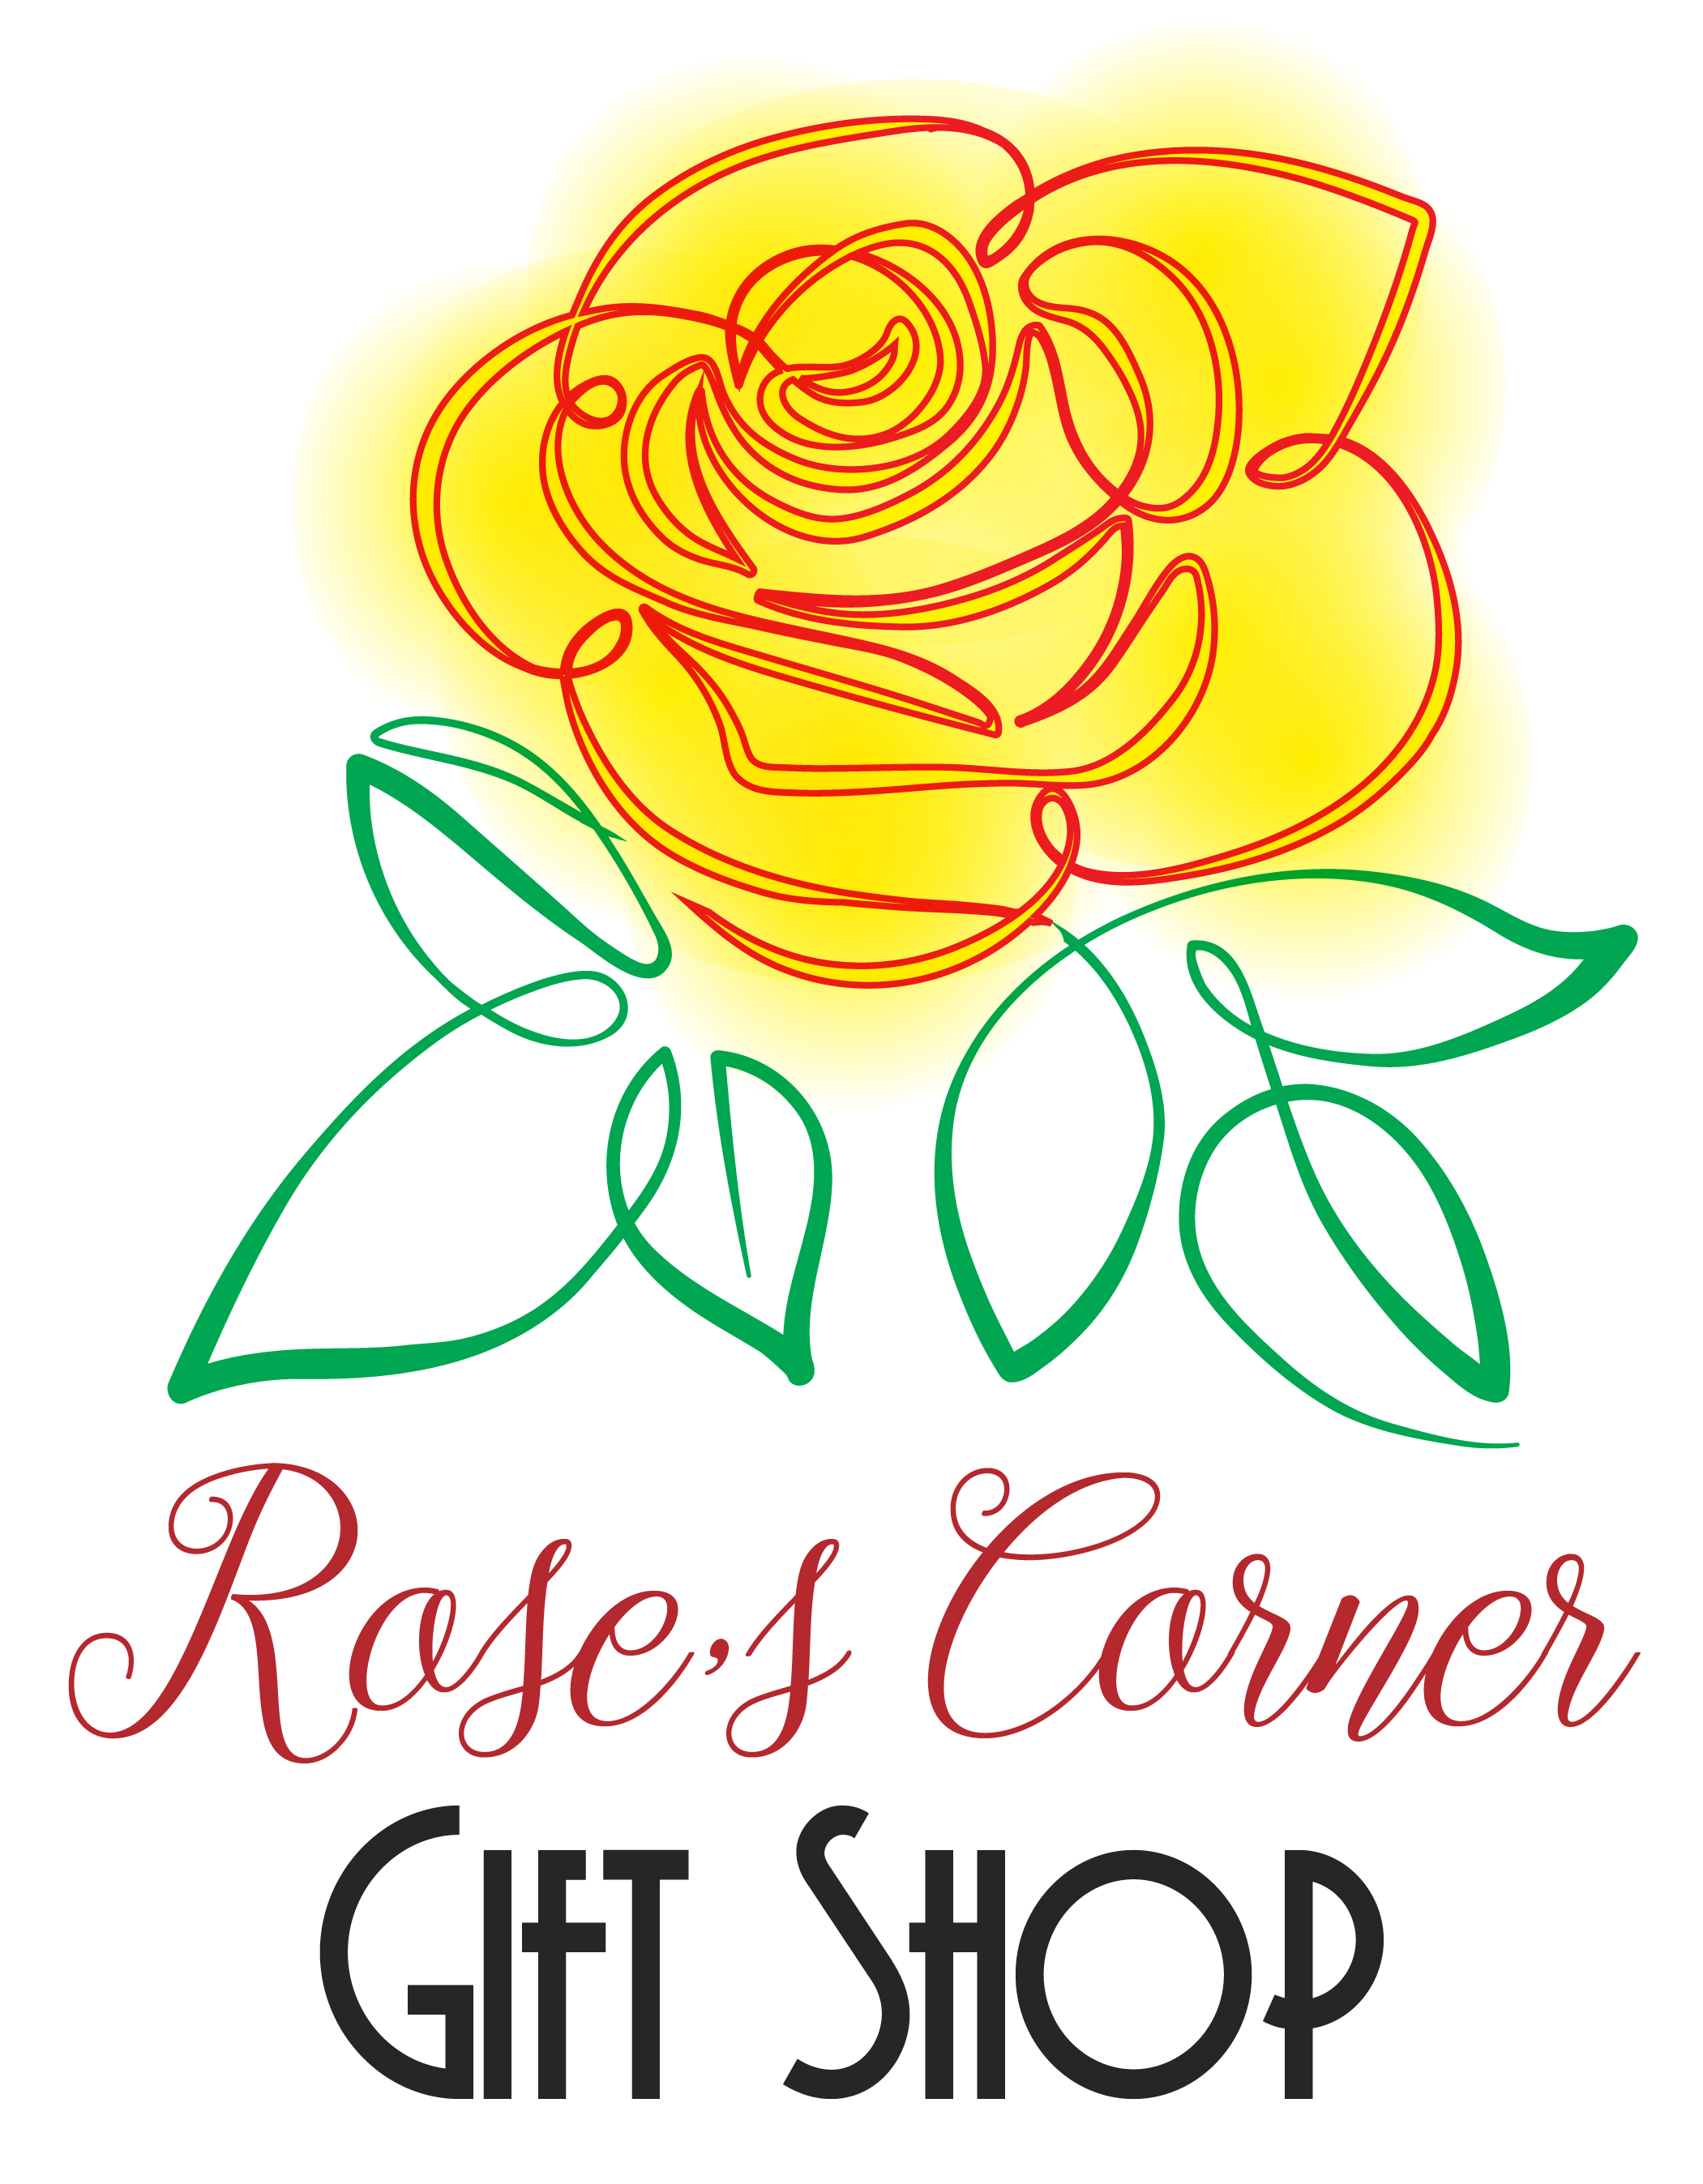 Graphic of Rose's Corner Gift Shop logo